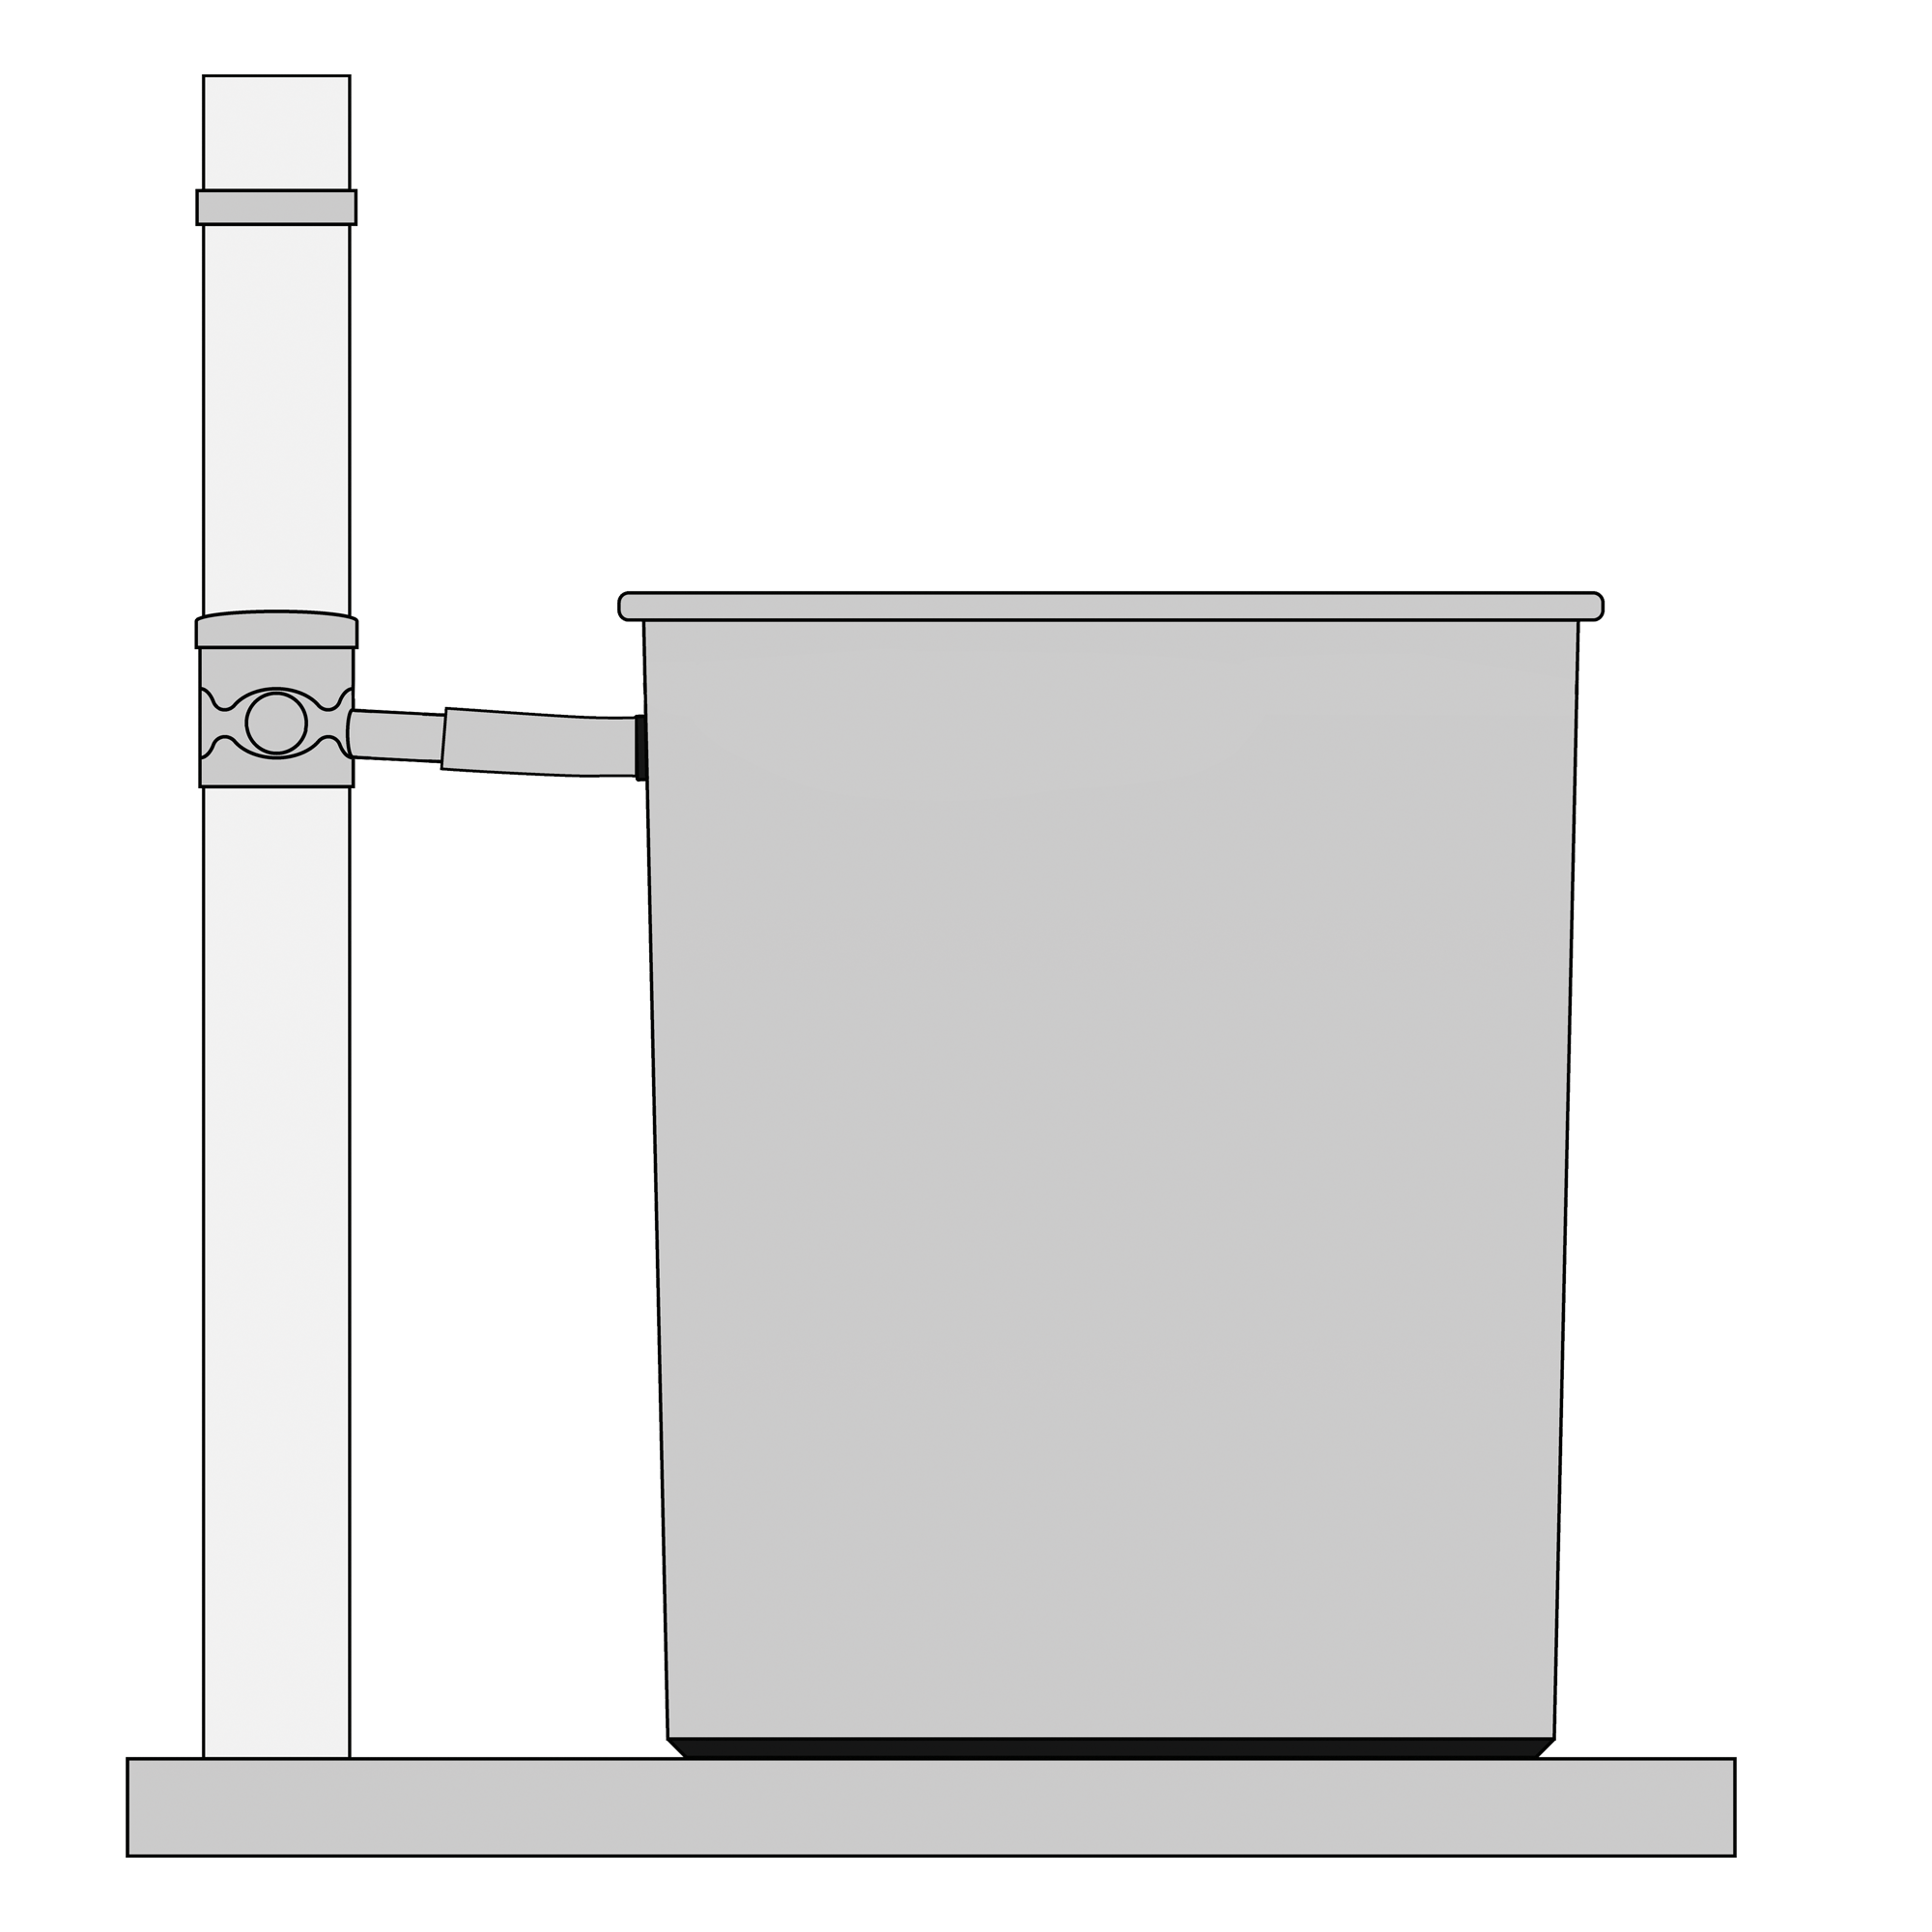 Regensammler 'Standard' grau, für Fallrohre Ø 68-100 mm + product picture